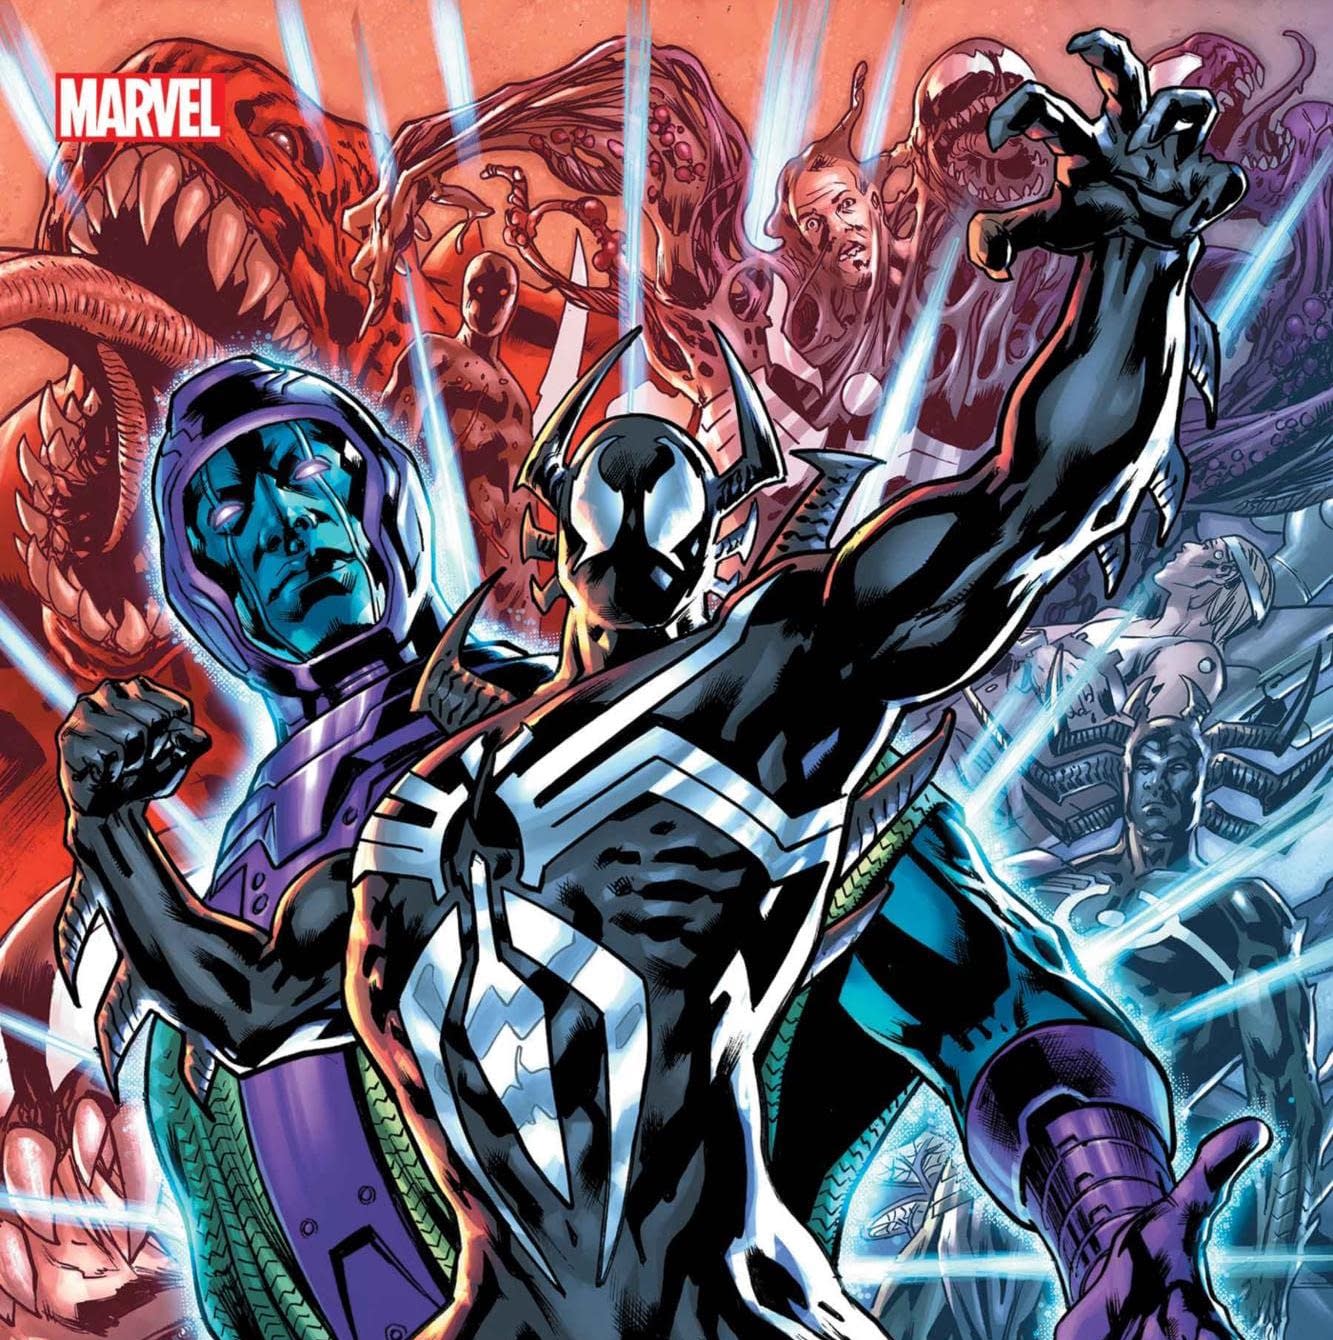 'Venom' #9 shows off Symbiote time travel powers